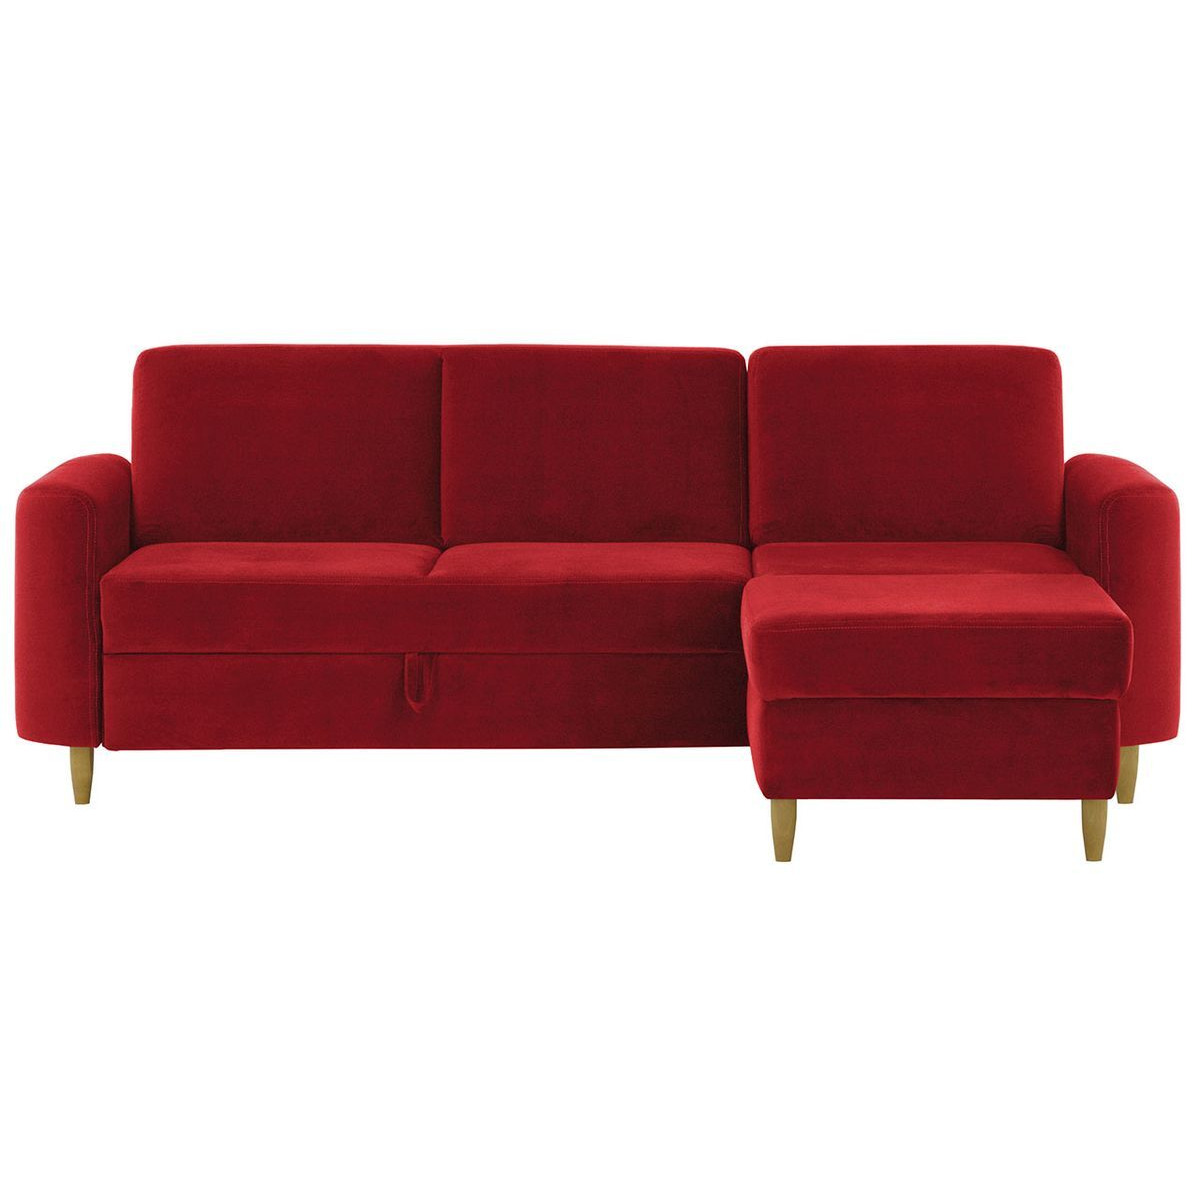 Elegance Corner Sofa Bed With Storage, dark red - image 1